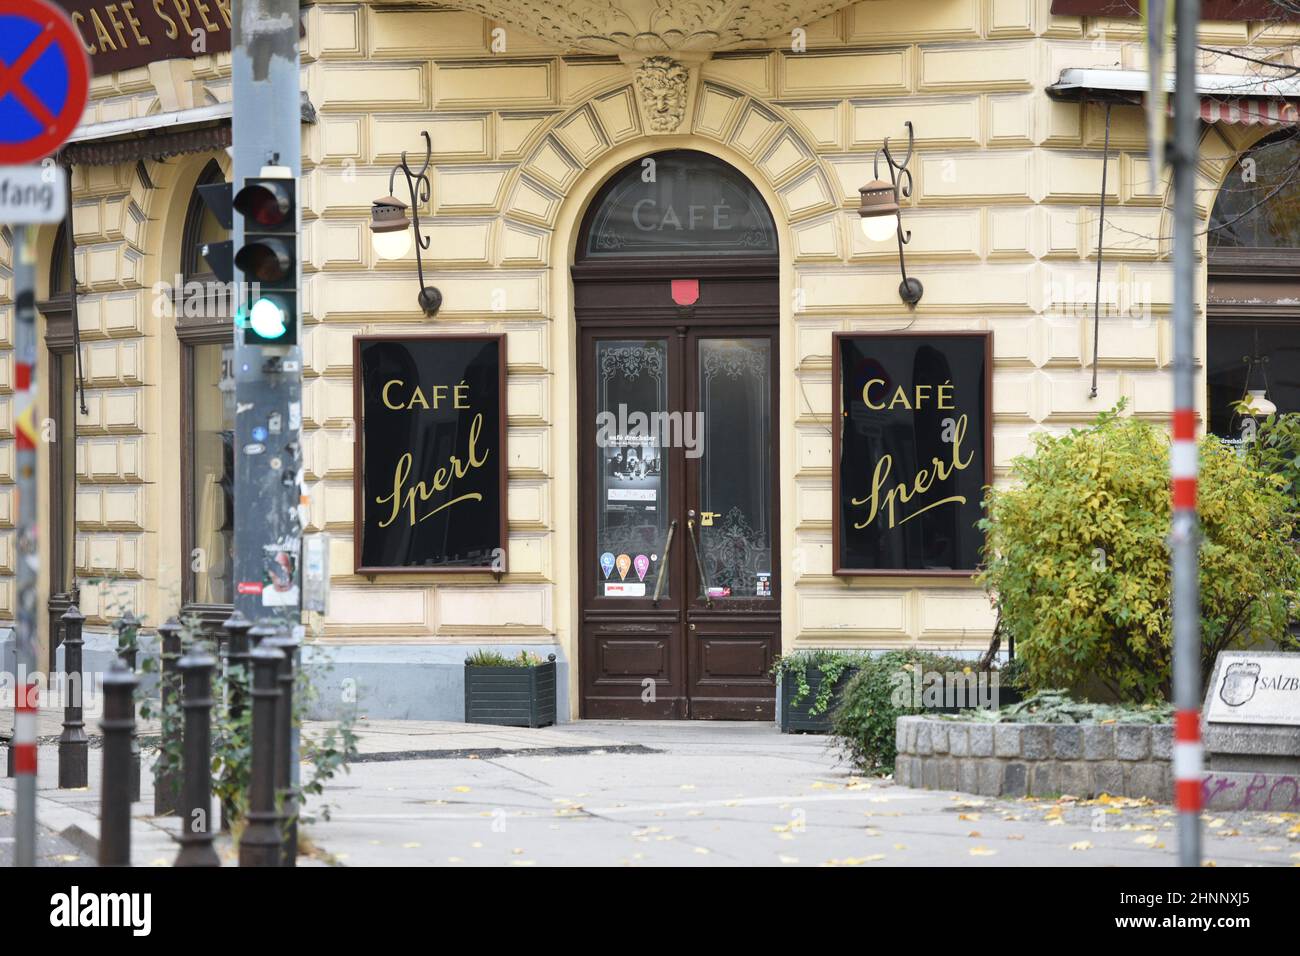 Das berühmte Cafe Sperl in Wien Österreich, Europa - The famous Cafe Sperl in Vienna Austria, Europe Stock Photo